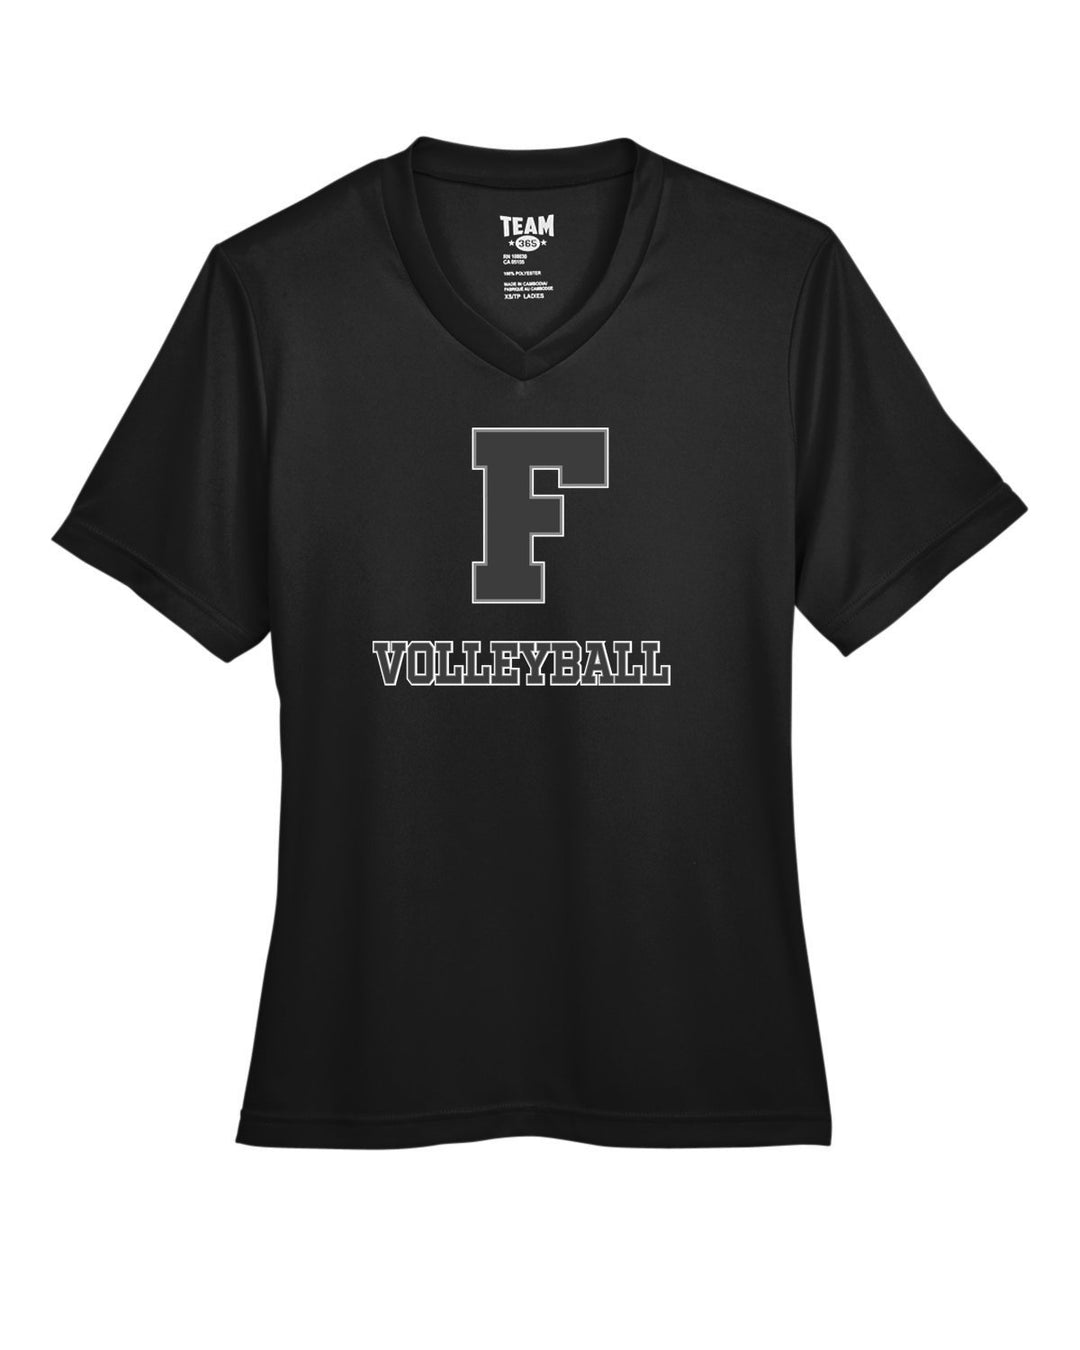 Foxboro Volleyball Women's Performance T-Shirt (TT11W)